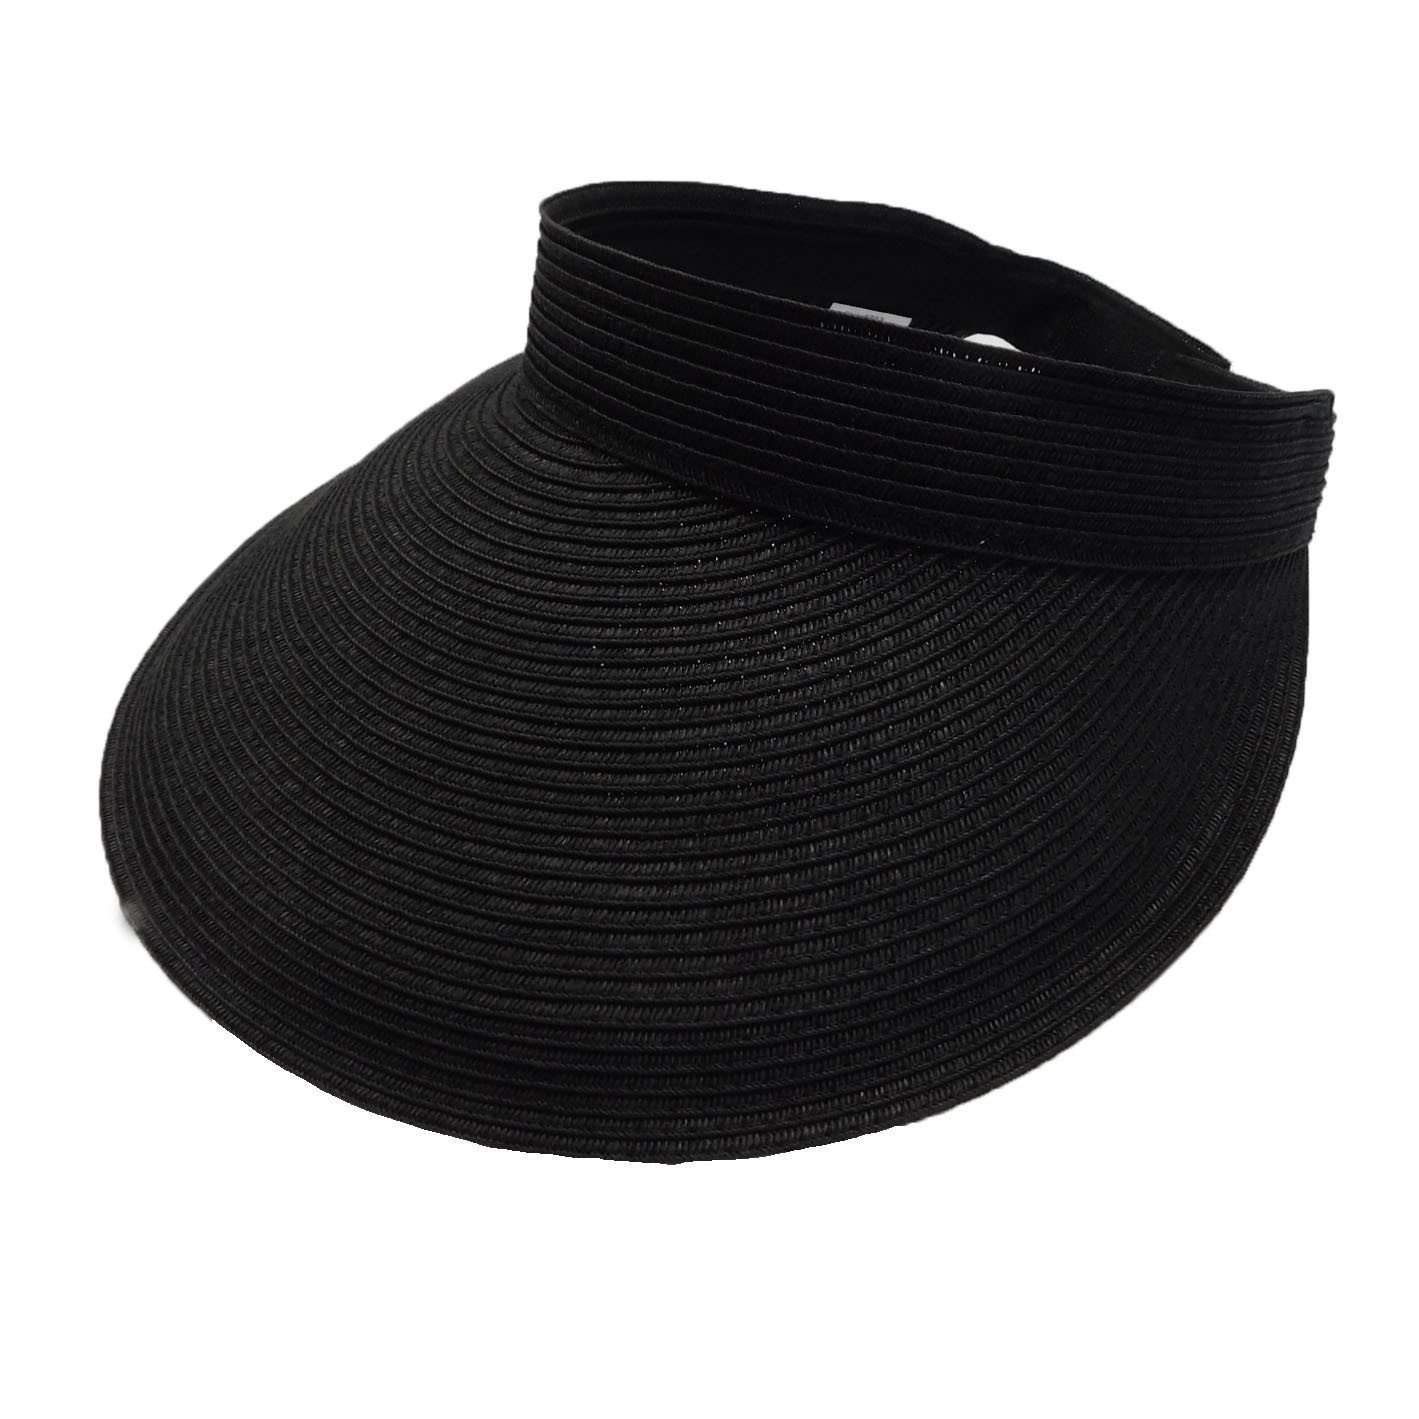 Roll Up Wide Brim Solid Color Sun Visor - Boardwalk Style Visor Cap Boardwalk Style Hats DA763-BlK Black  